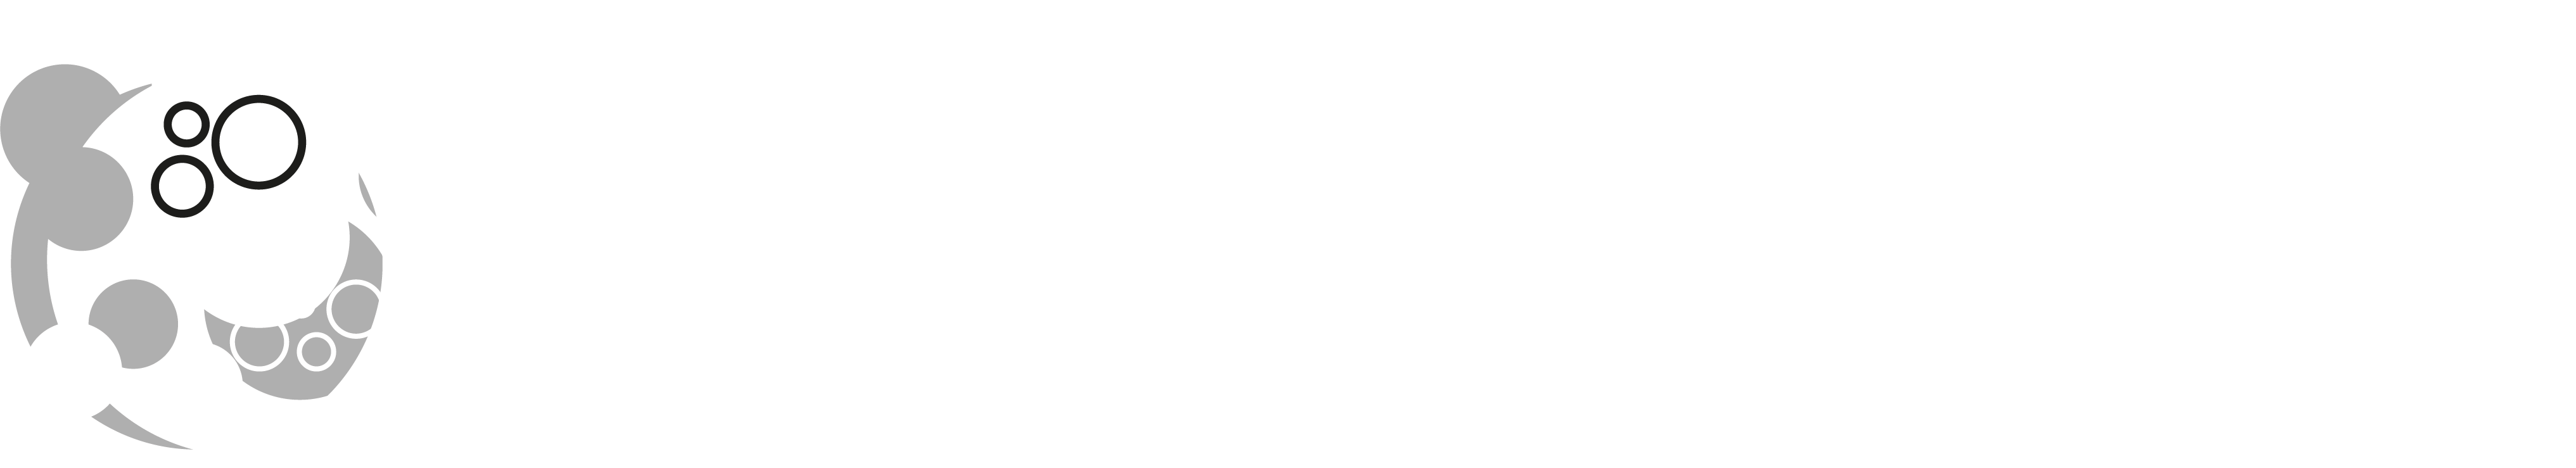 32726 5th Exosome Based Therapeutics Summit logo WO